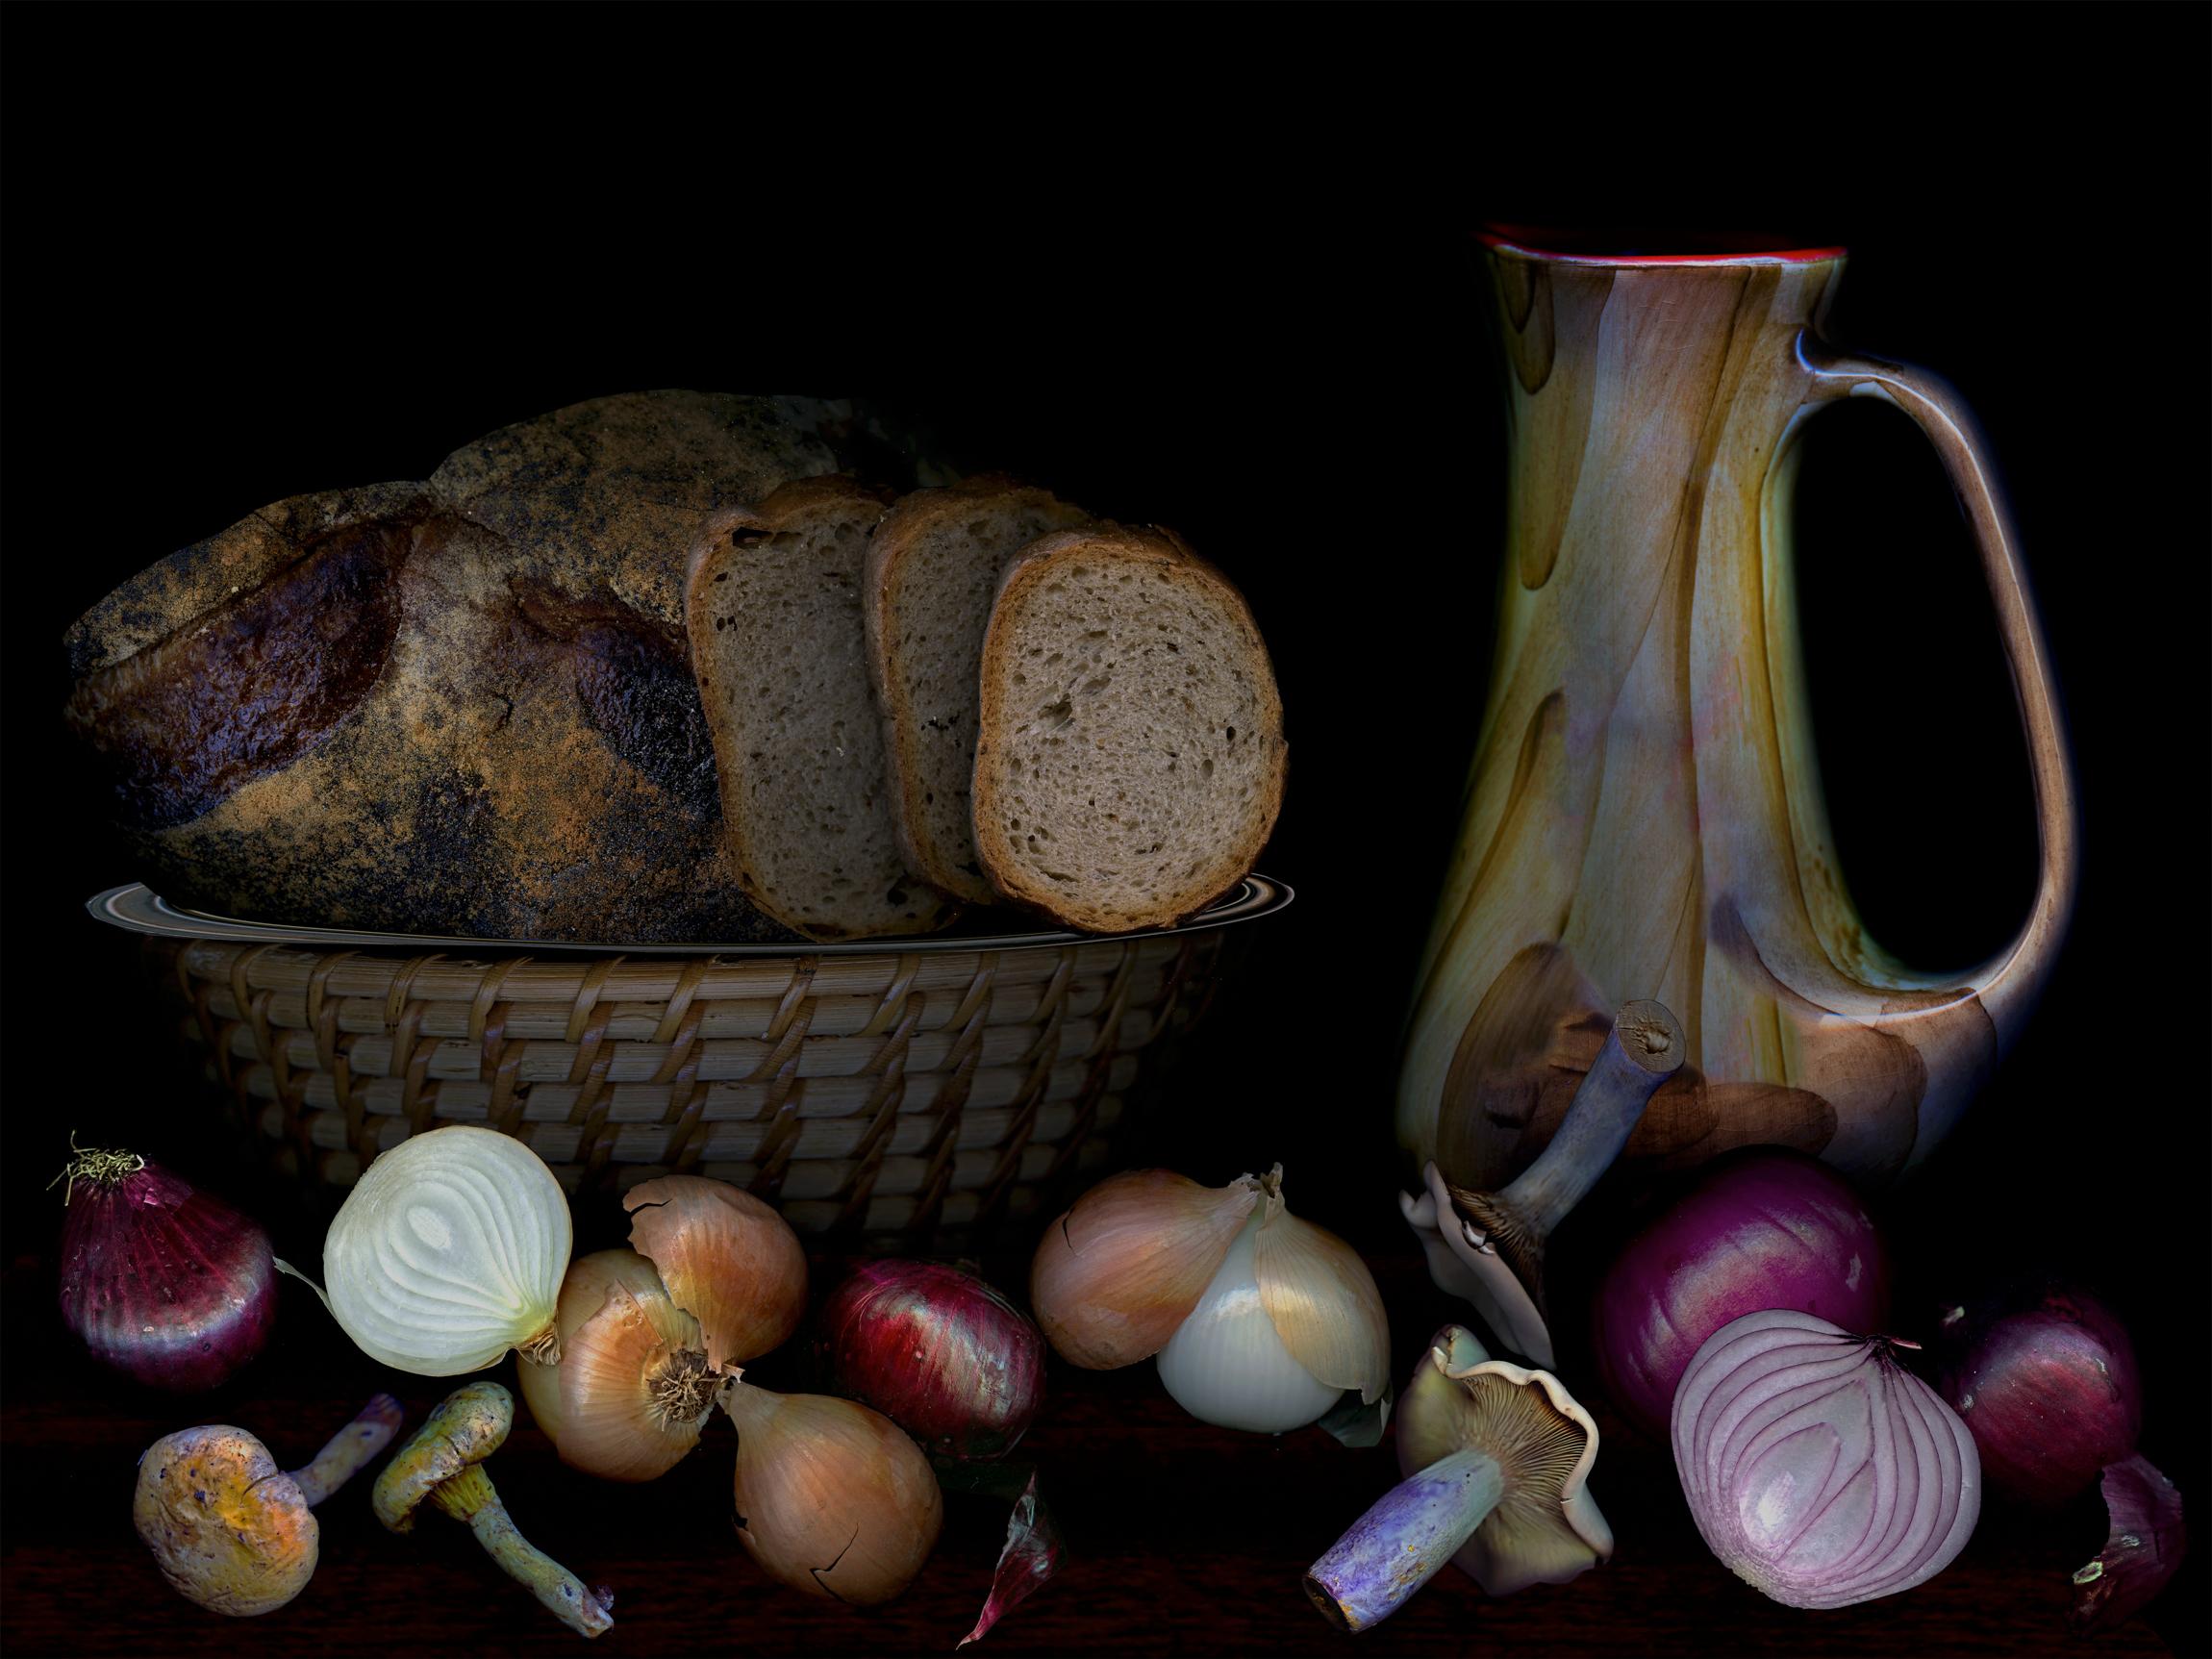 Zoltan Gerliczki Still-Life Photograph - Vegetables from my garden #10 Digital Collage Color Photograph